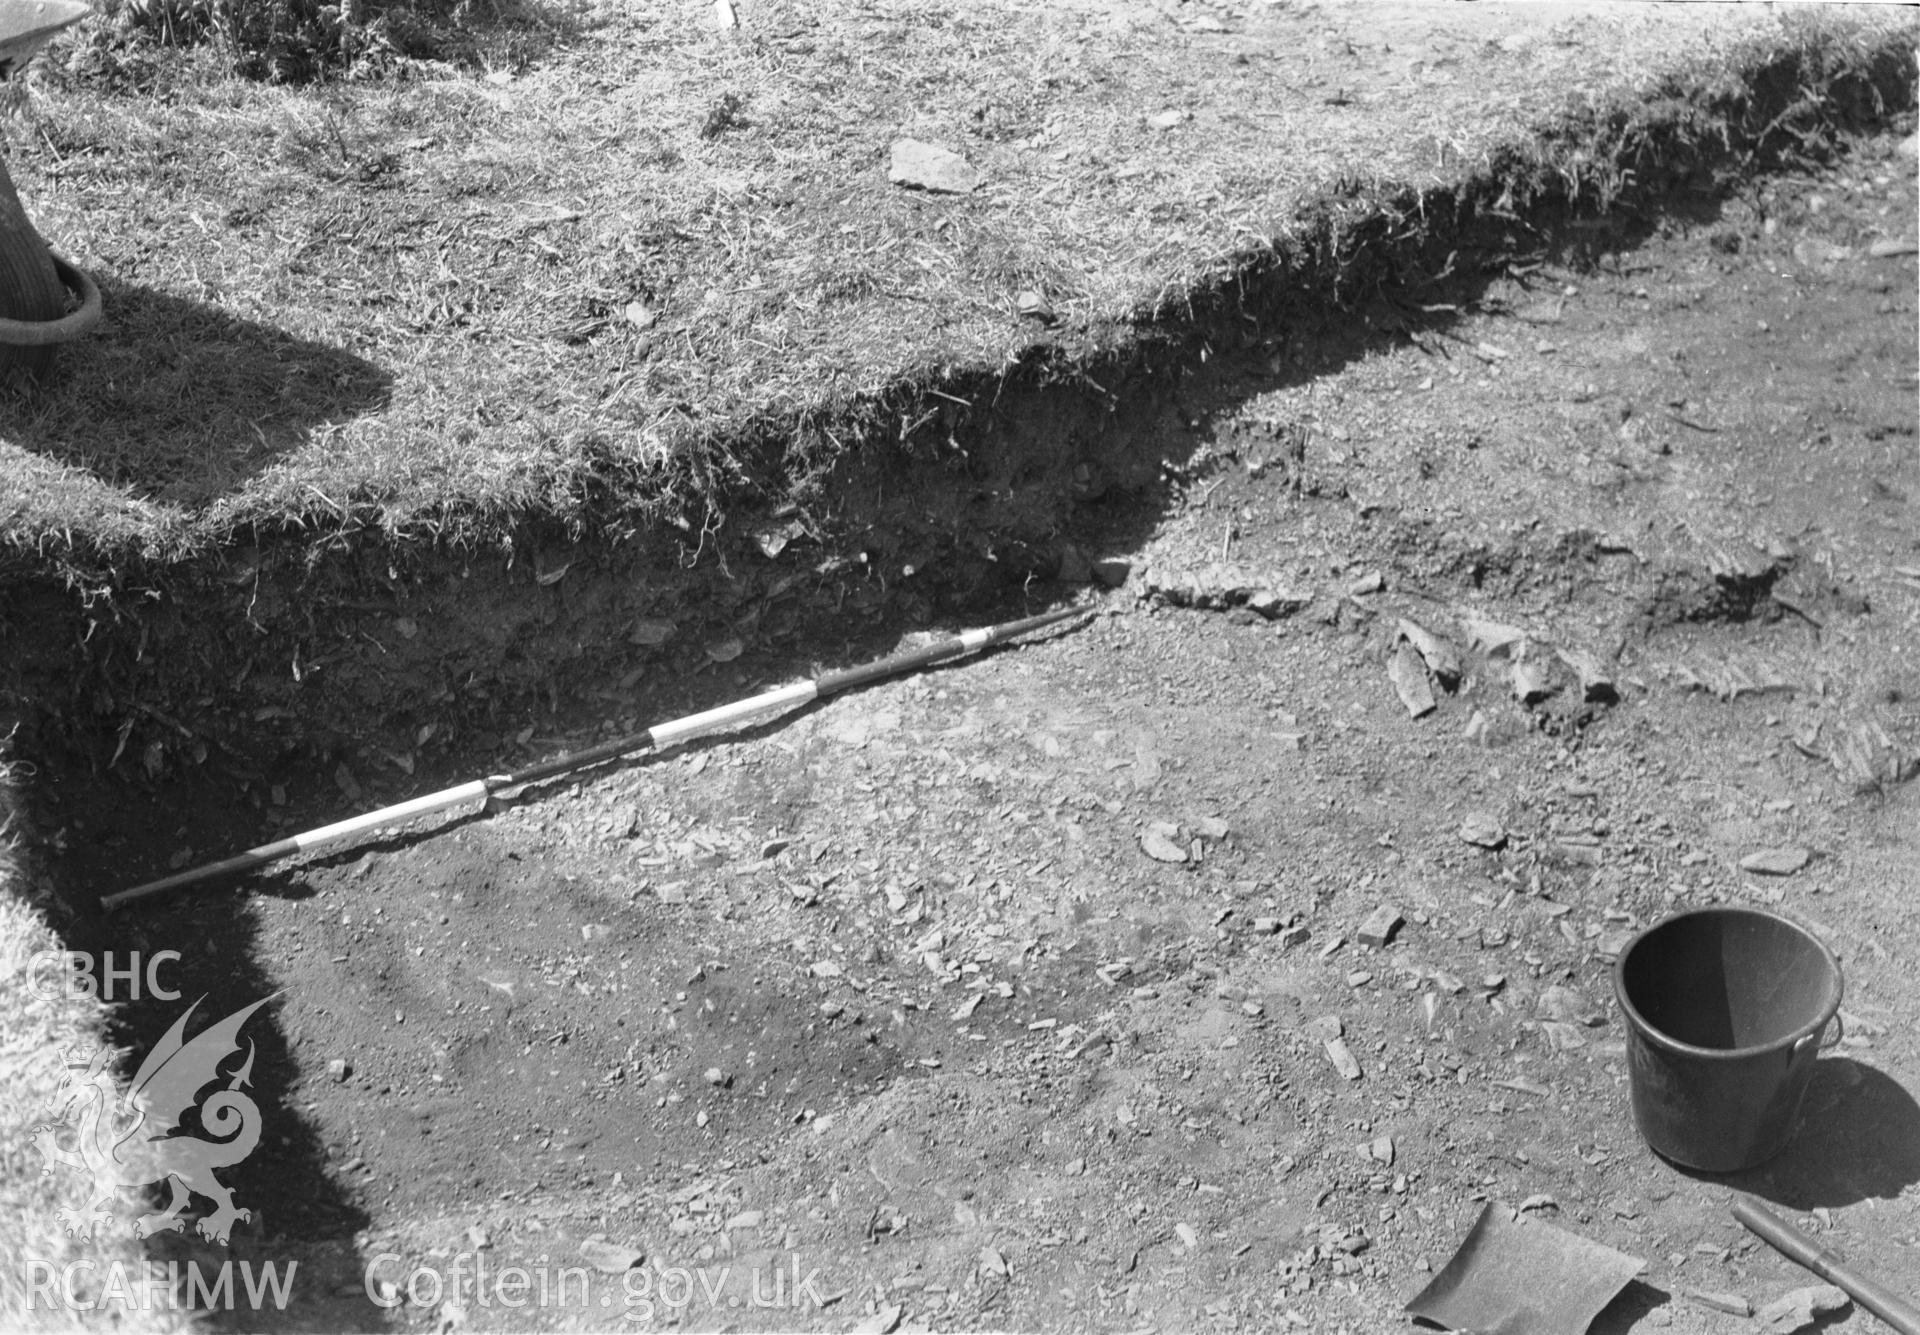 View showing excavation in progress.